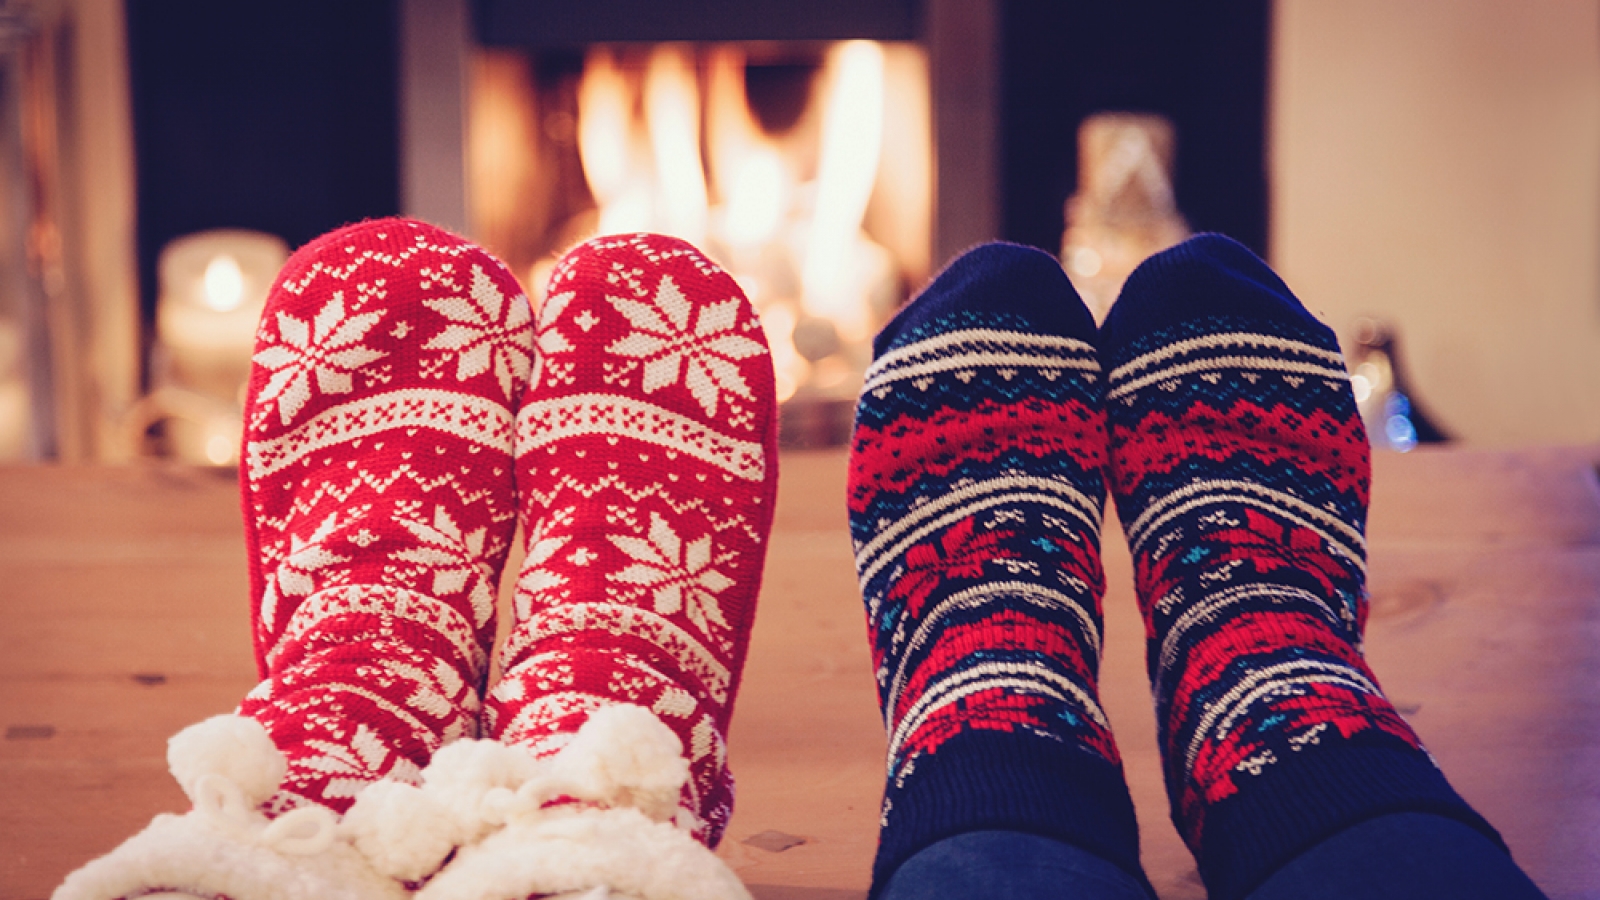 People wearing cozy socks in front of a fire